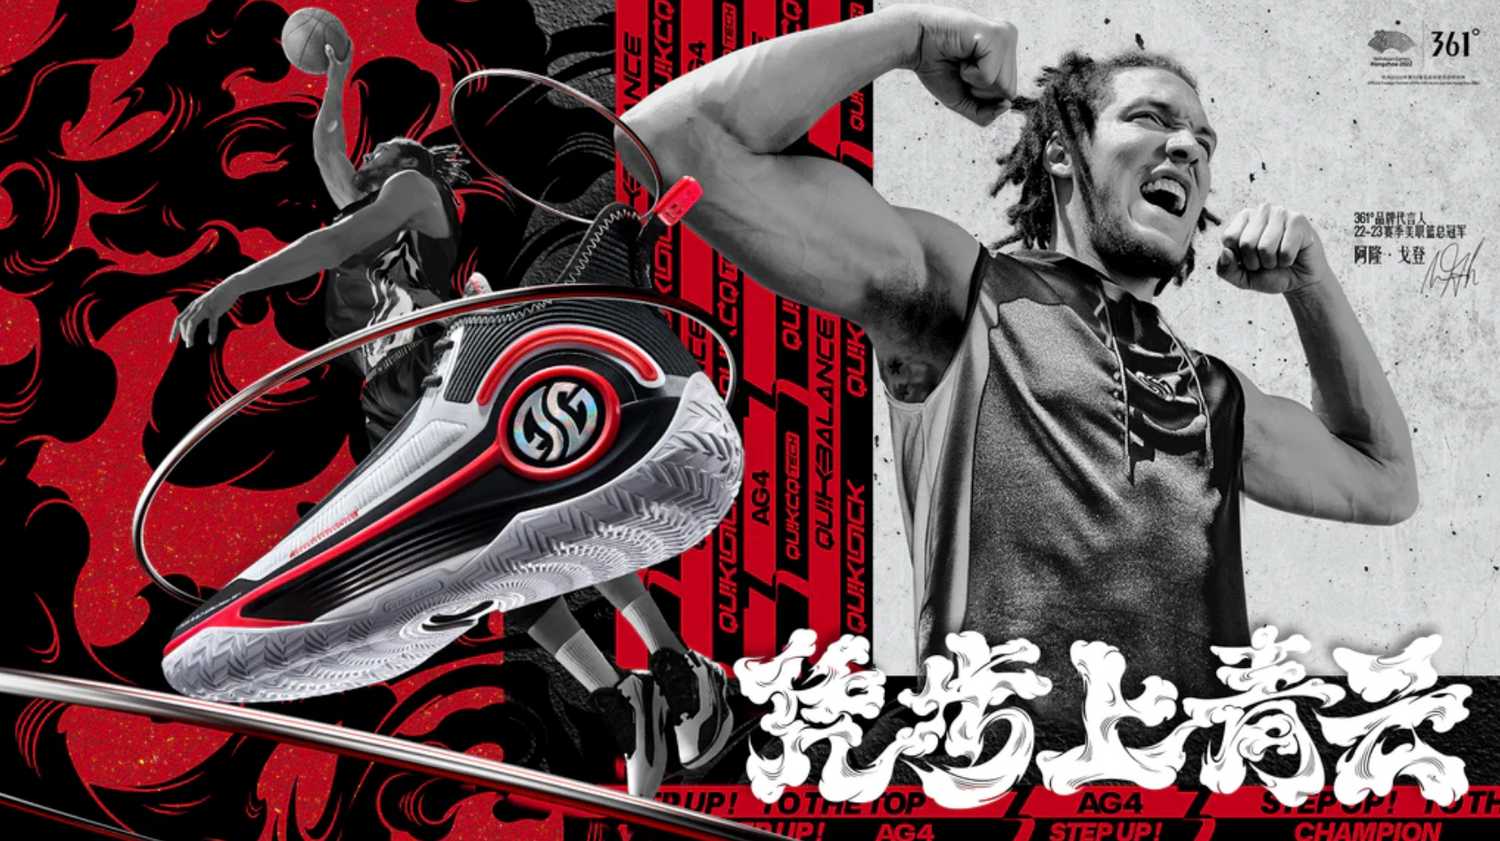 NBA Champion Aaron Gordon Debuts 361° AG4 Signature Shoe in Partnership with Global Marketplace KICKS CREW